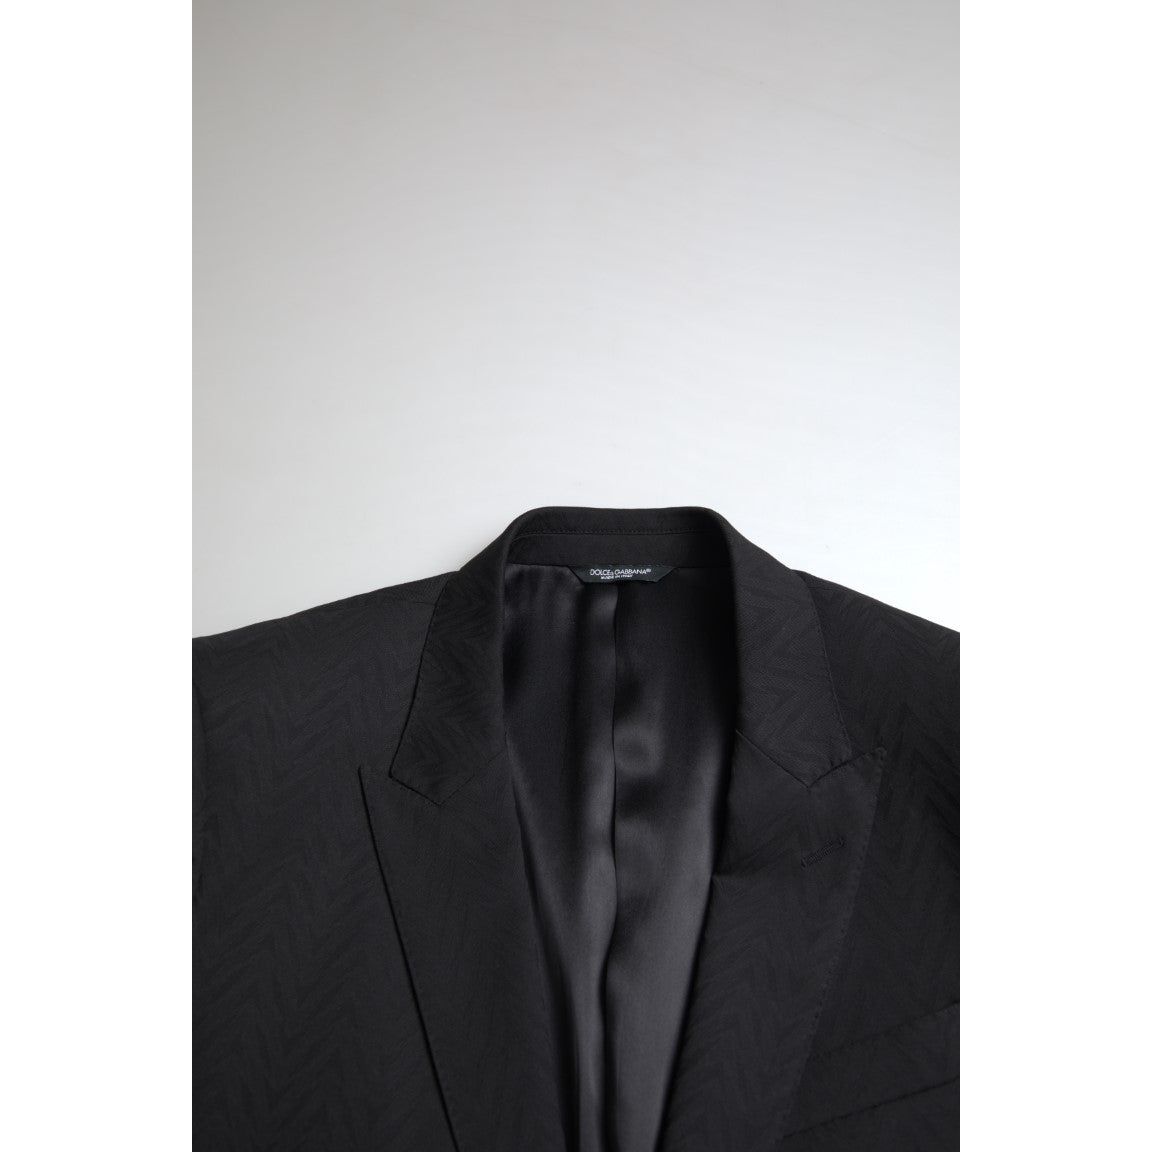 Dolce & Gabbana Exclusive Martini Black Slim Fit Suit black-2-piece-single-breasted-martini-suit-2